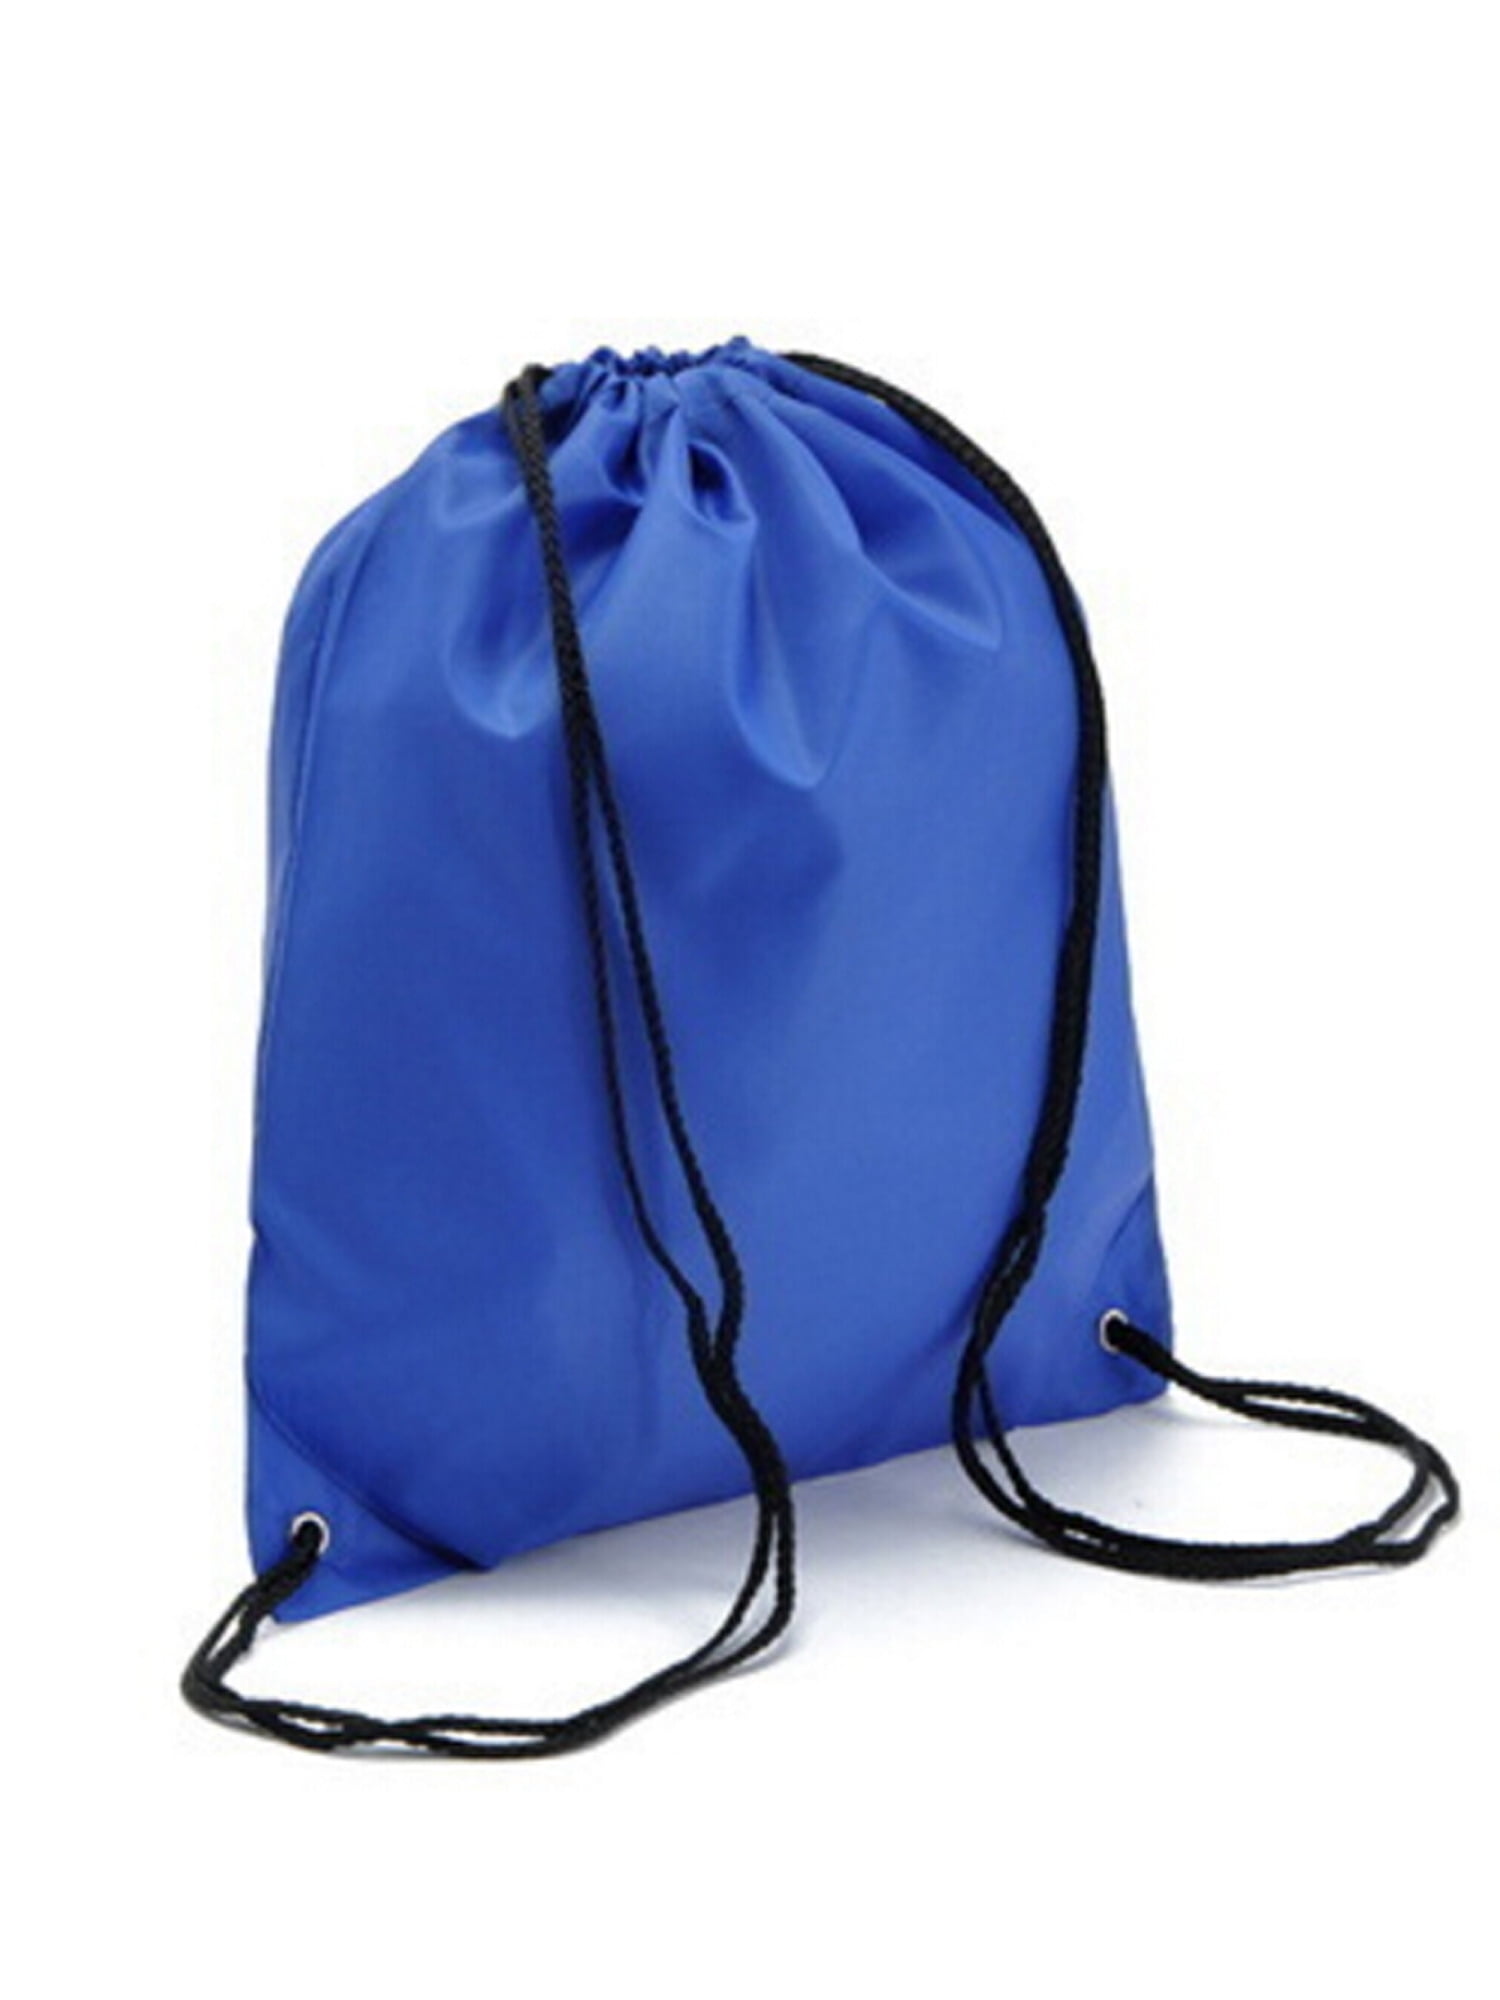 Unisex Drawstring Backpack Cinch Sack Gym Tote Bag School Travel Casual Packs 